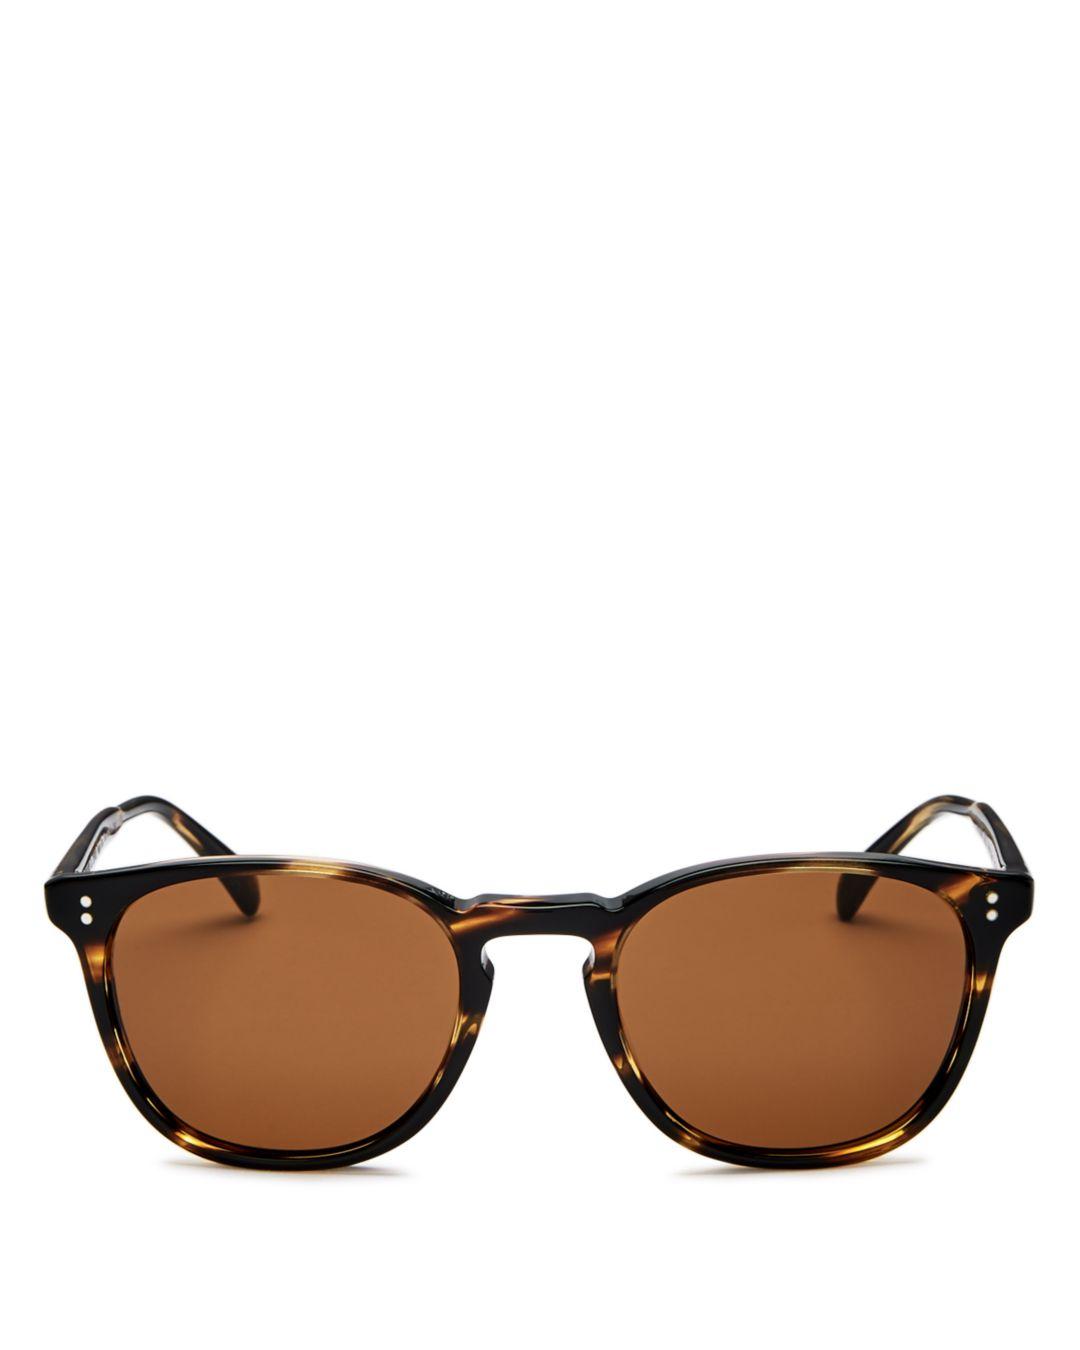 Oliver Peoples Men's Finley Esq Sunglasses in Brown for Men - Lyst